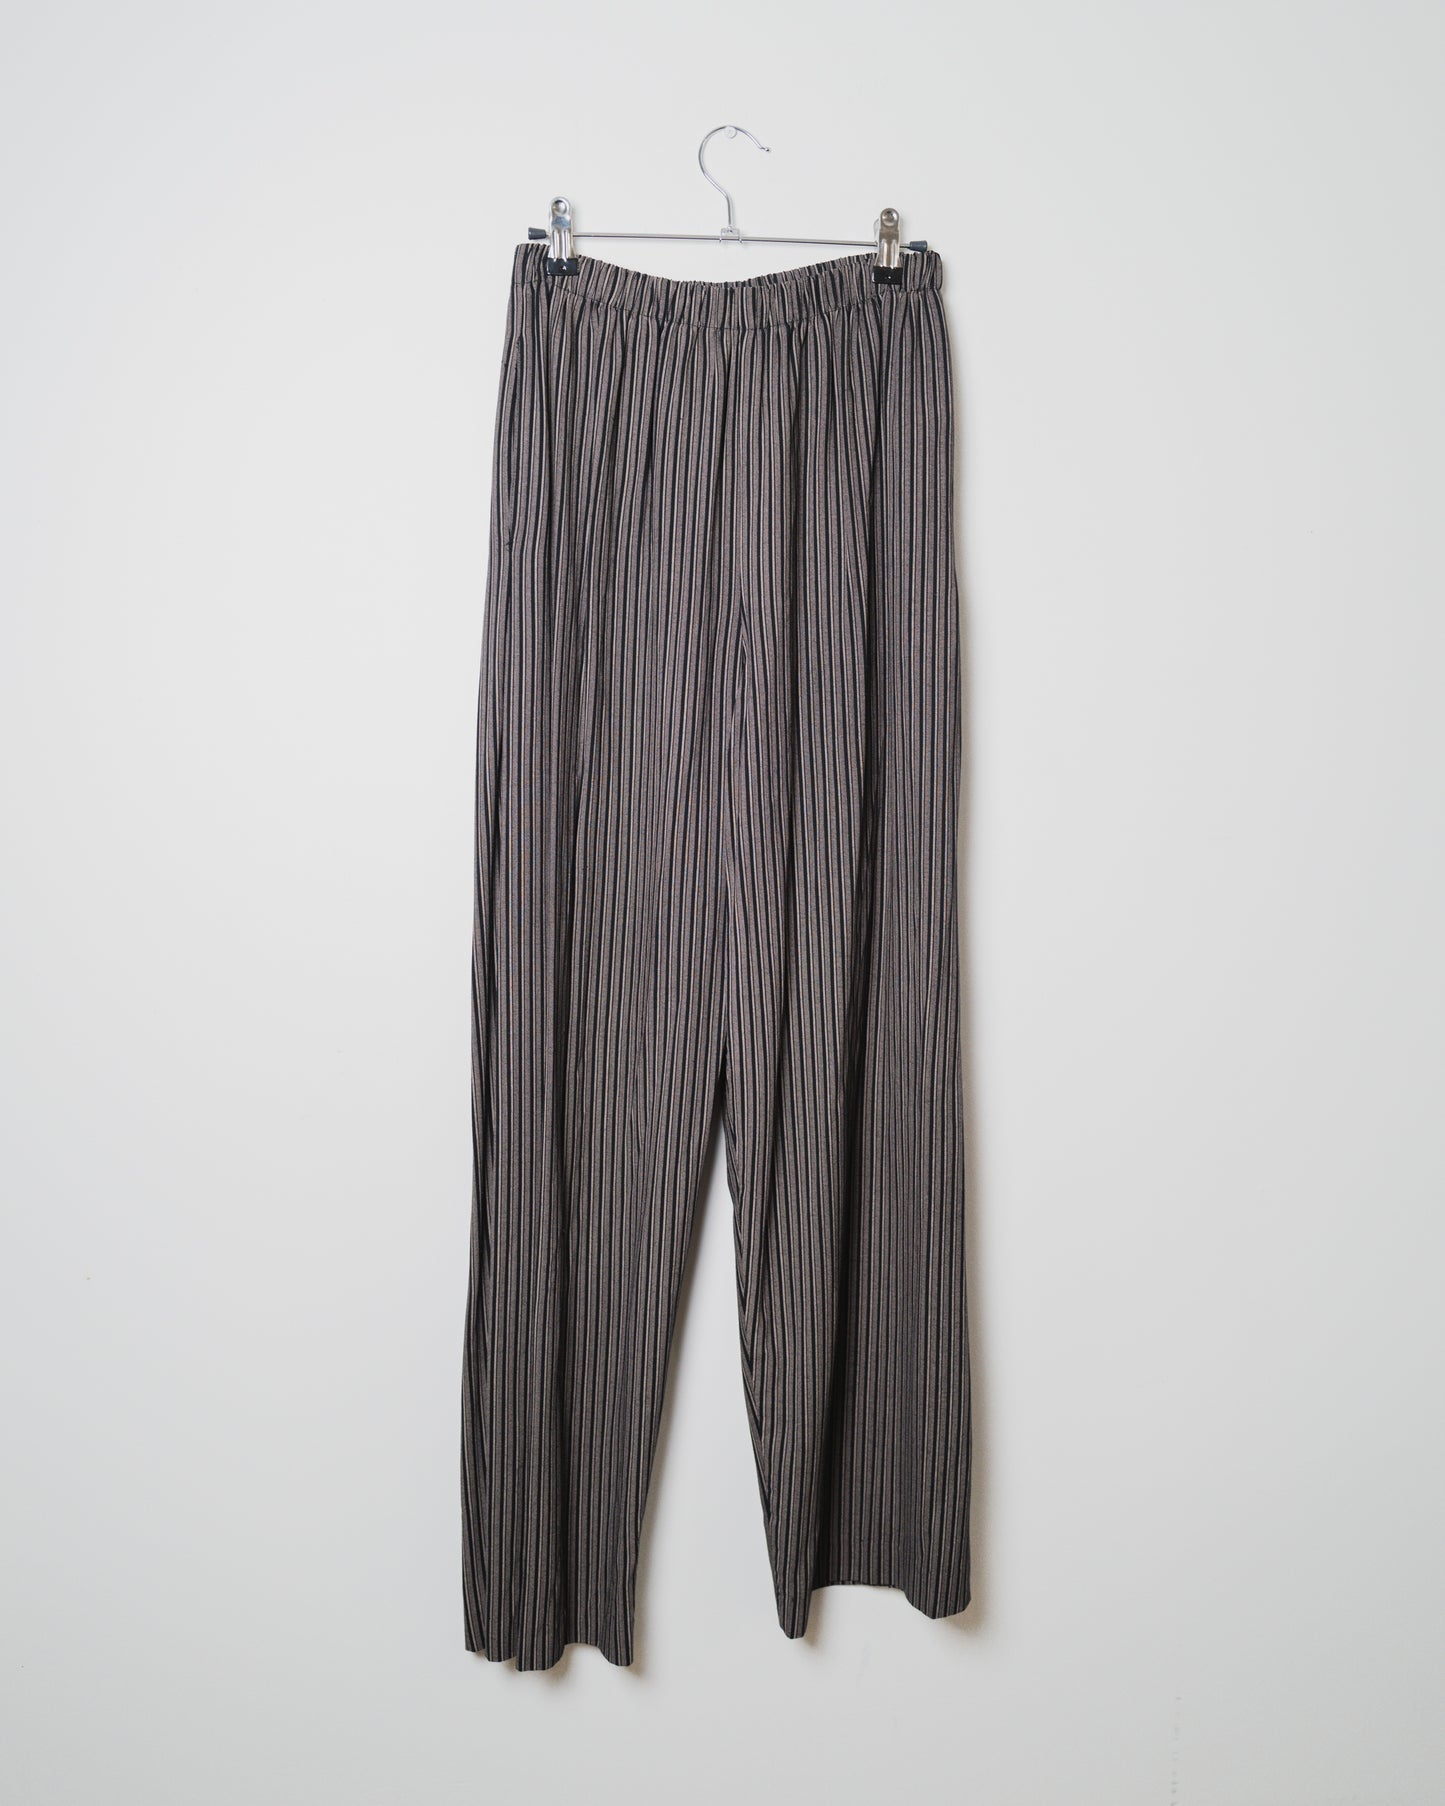 Vintage Stripe Pant - Size Medium